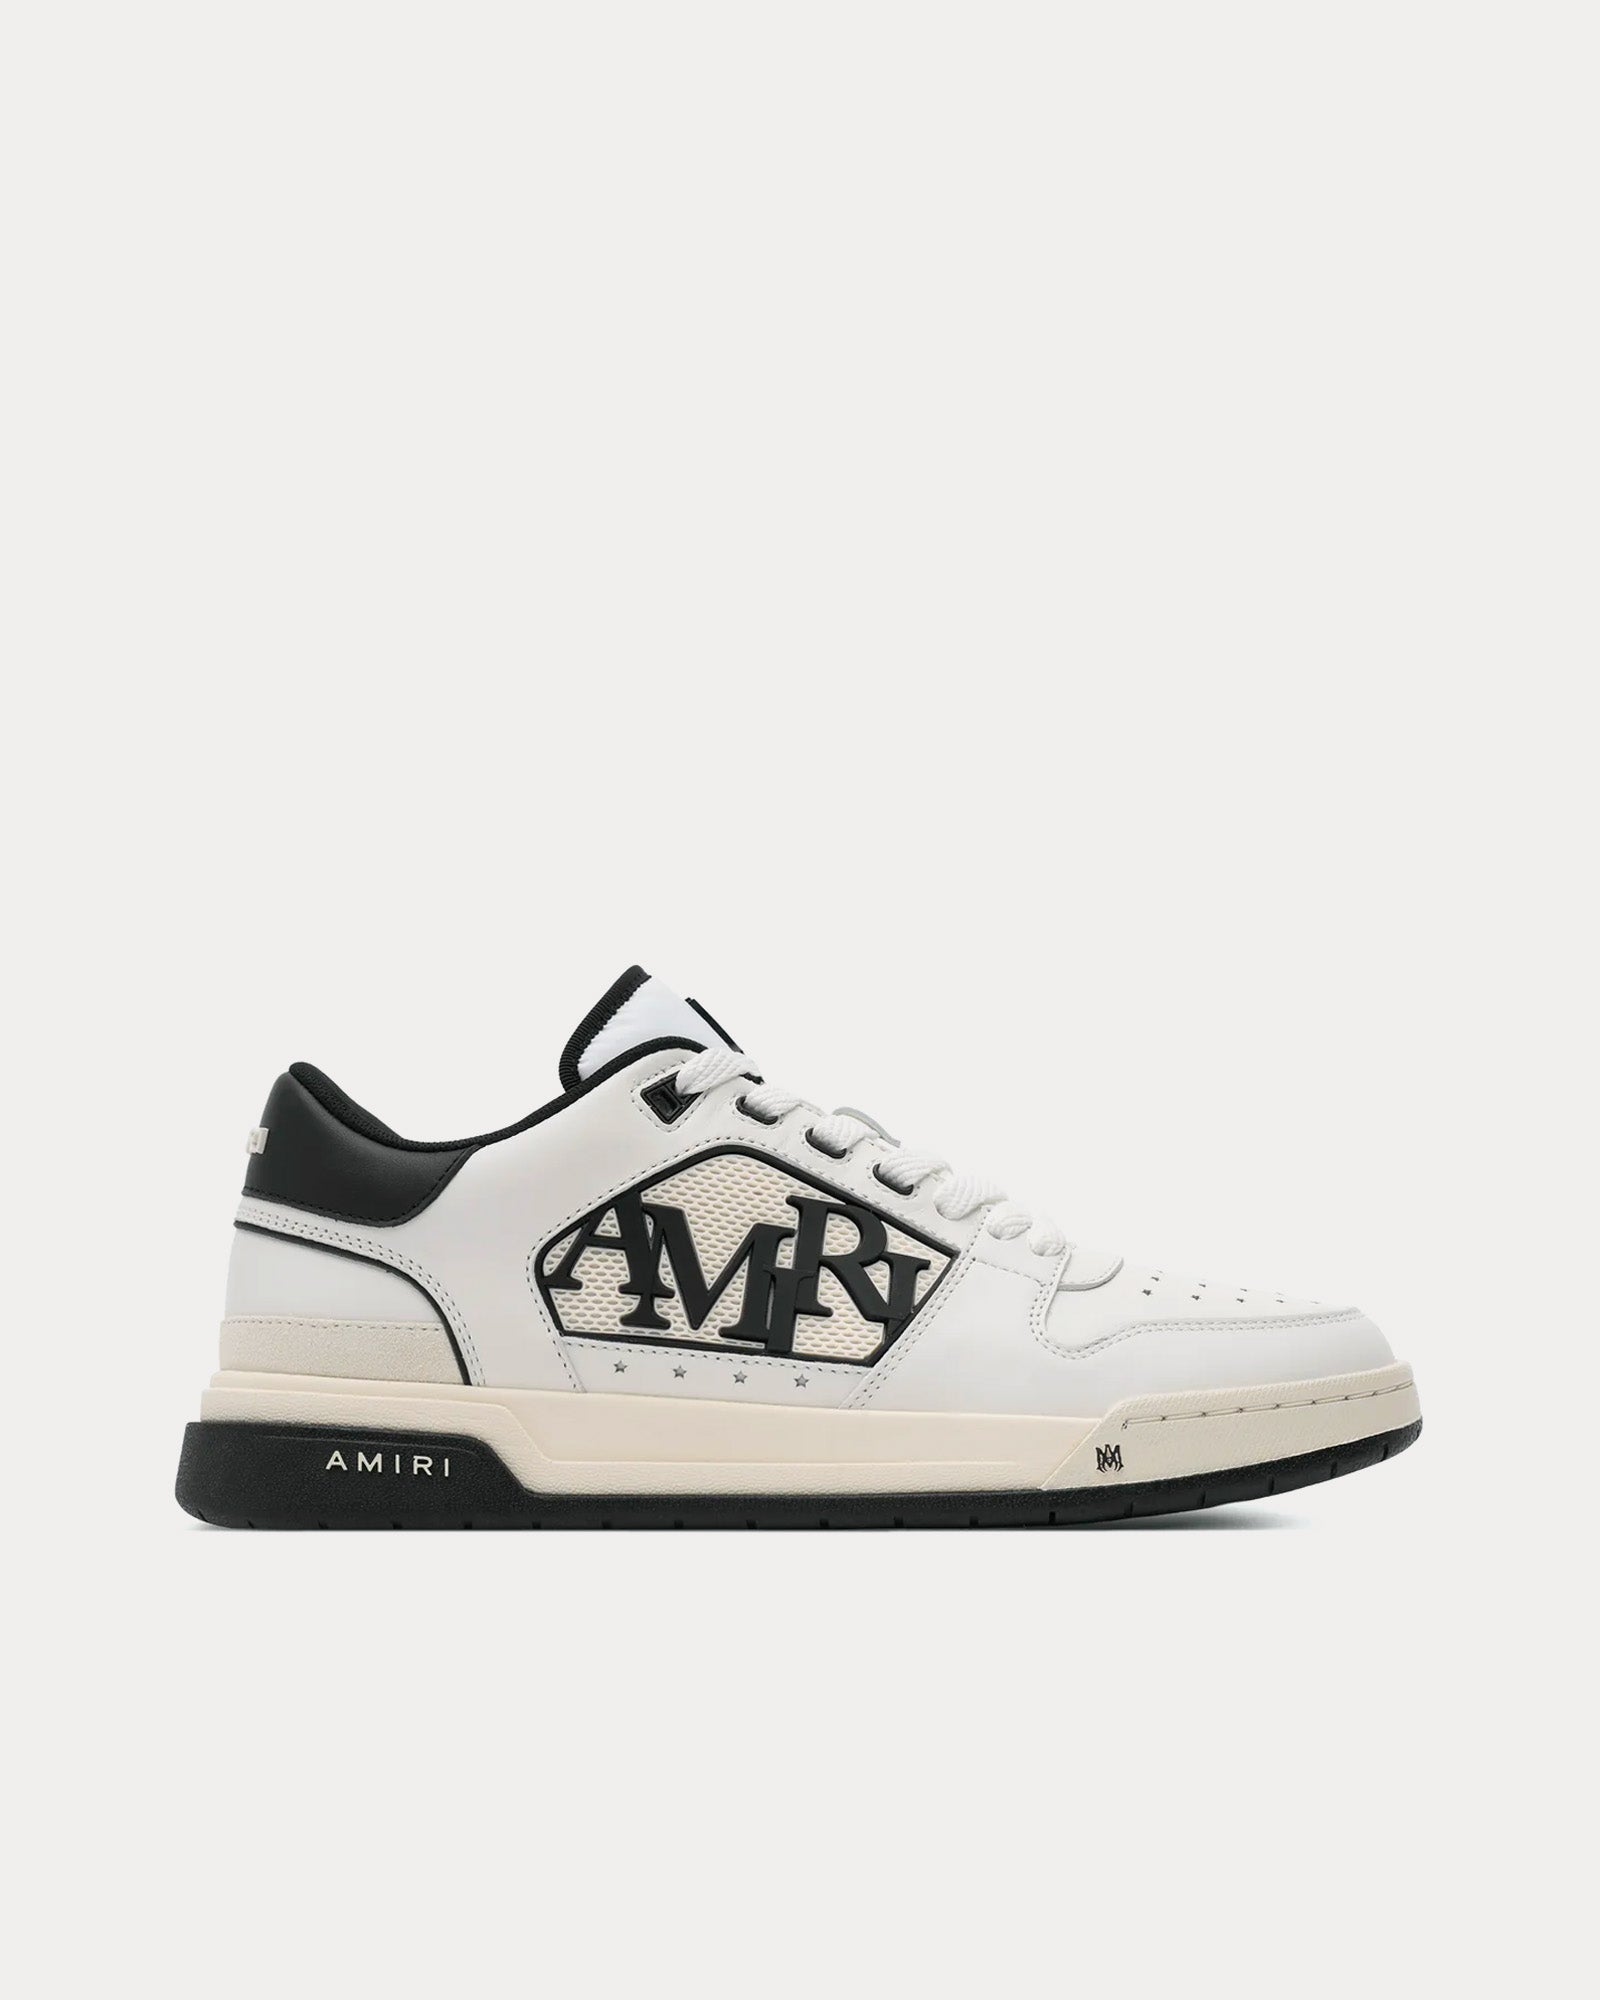 AMIRI - Classic White / Black Low Top Sneakers